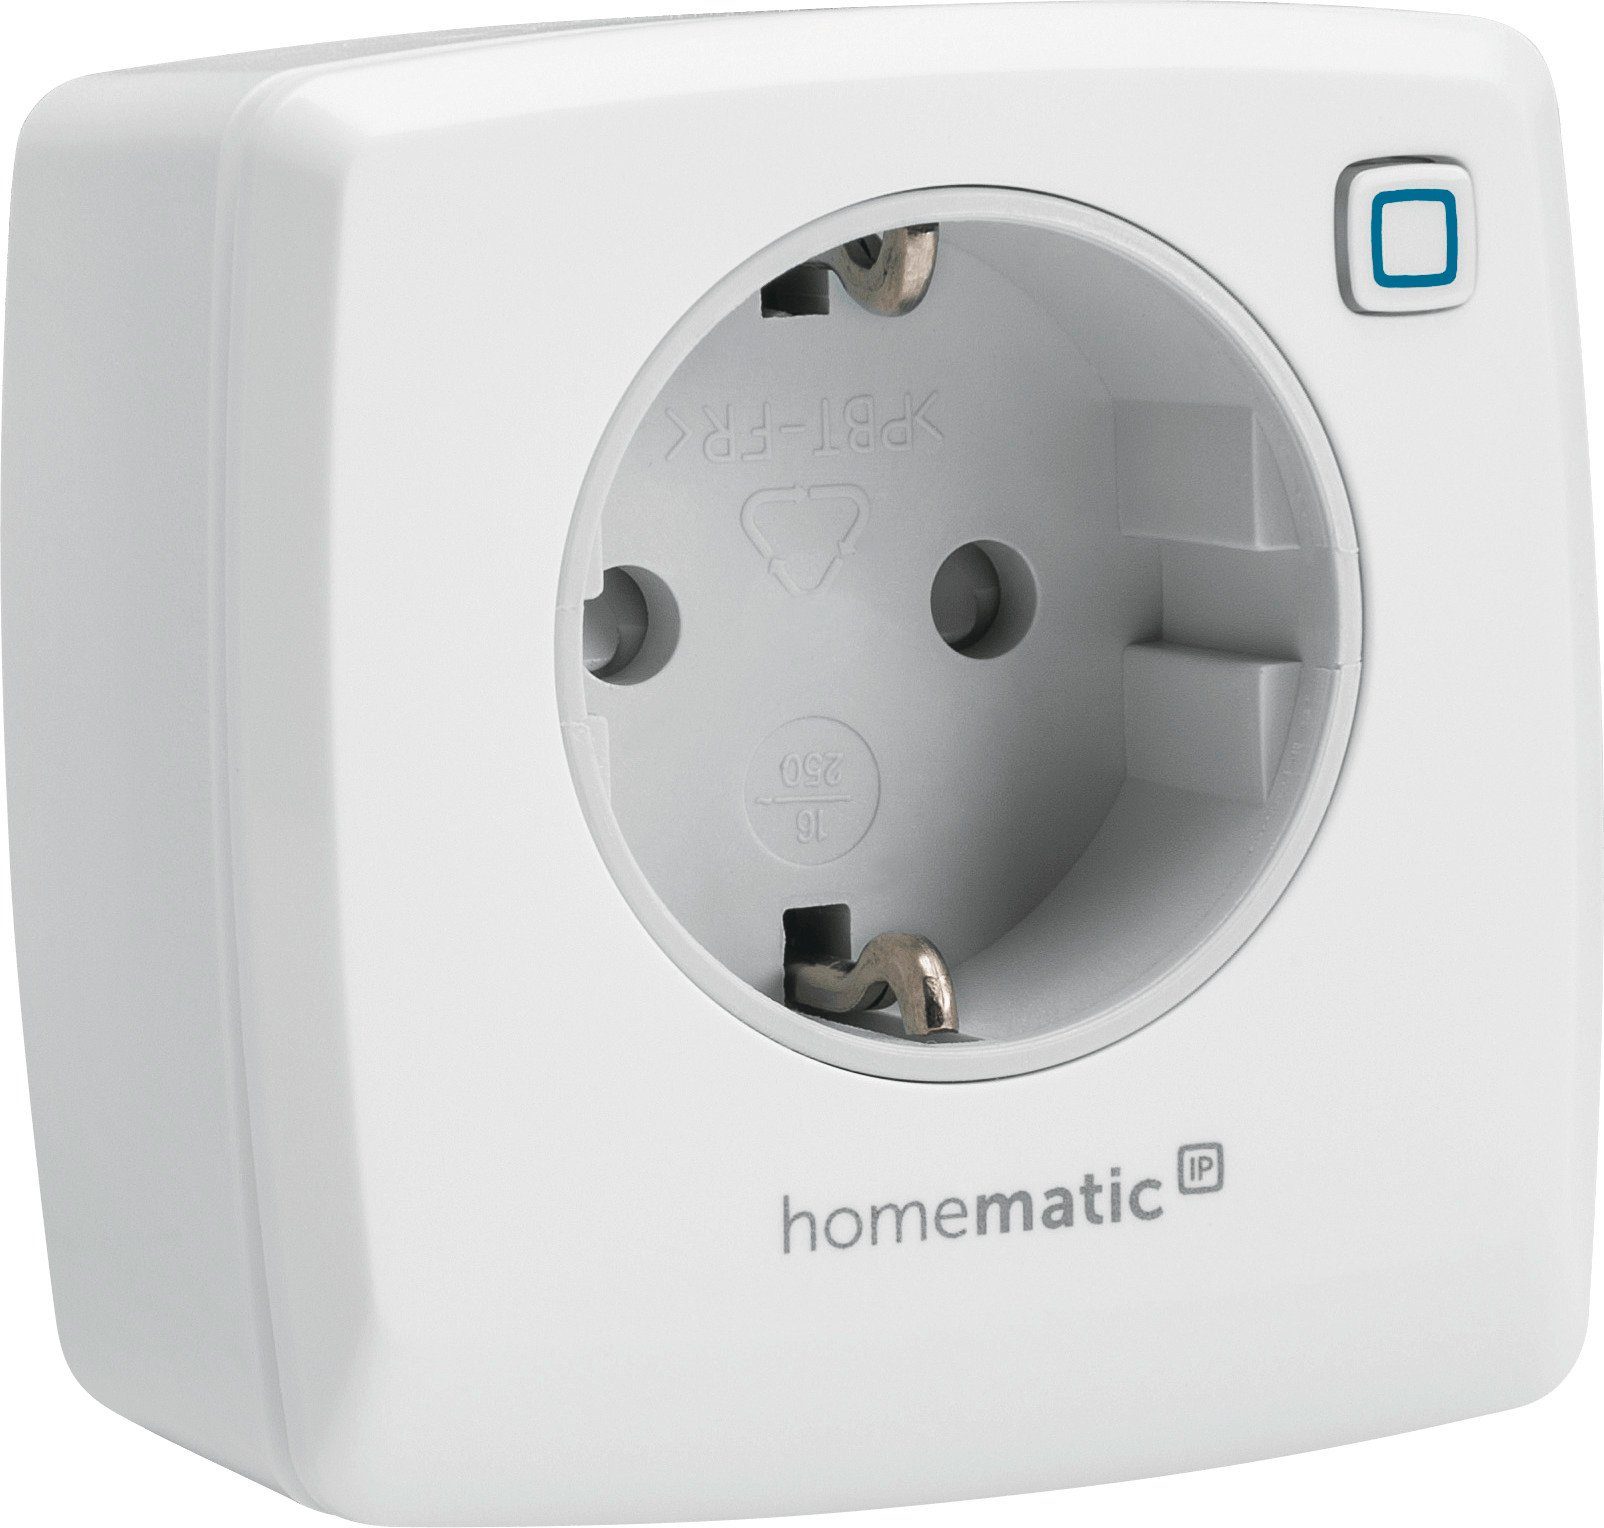 Homematic IP Schalt-Mess-Steckdose (V2) - 157337A0 Smart-Home-Zubehör